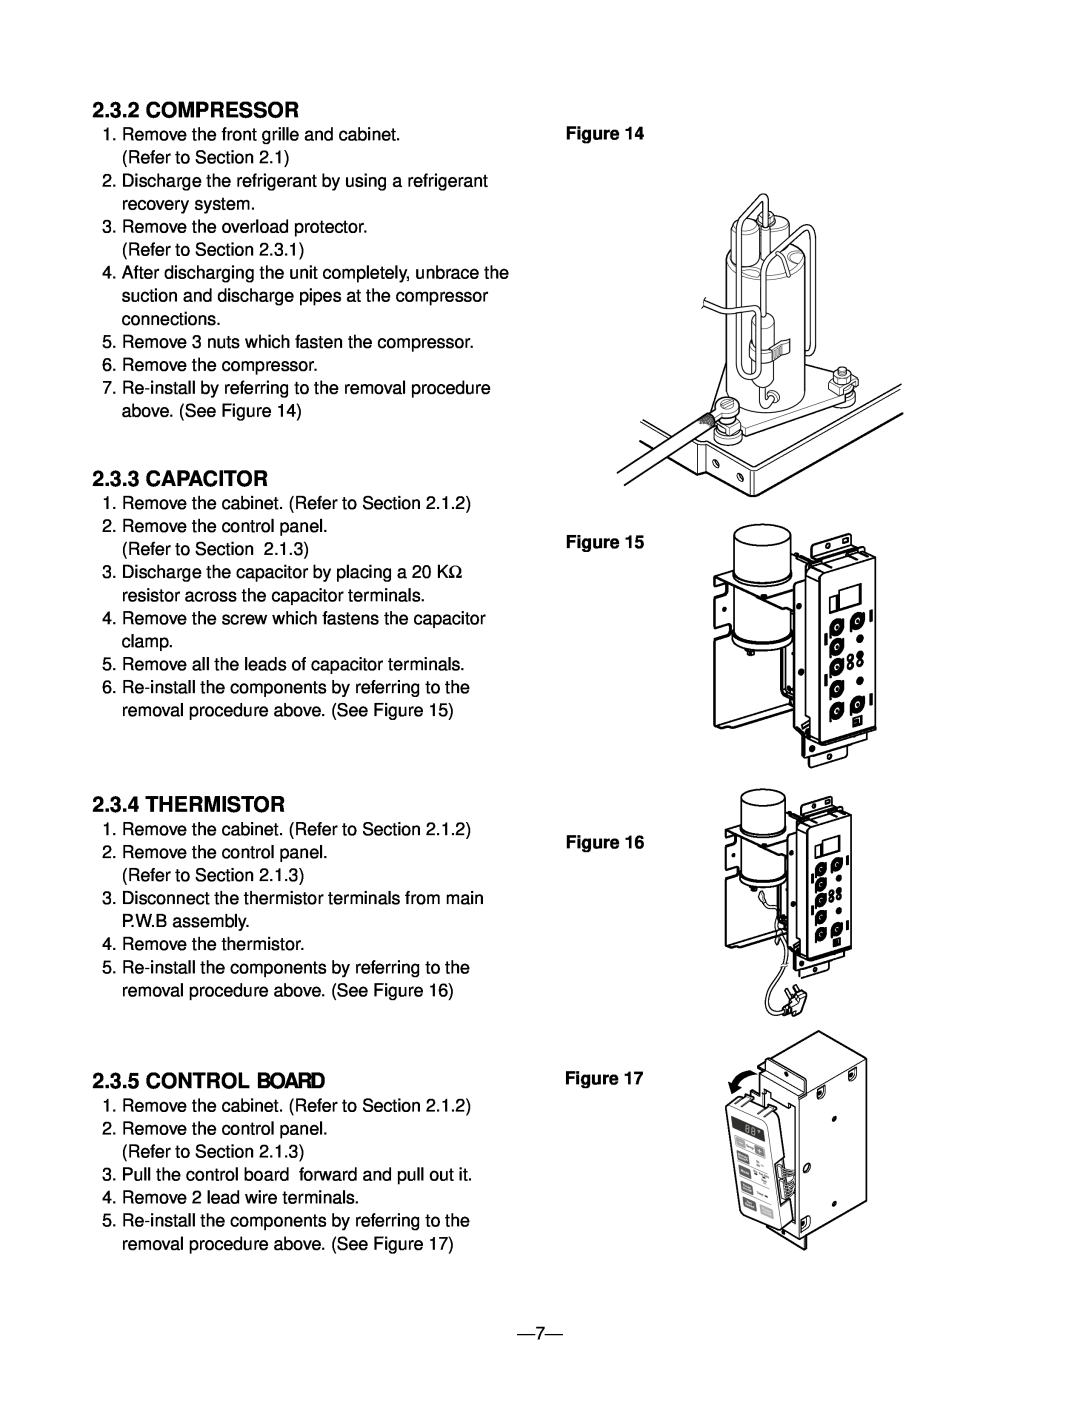 Friedrich CP05N10A manual Compressor, Capacitor, Thermistor, Control Board, Figure Figure 